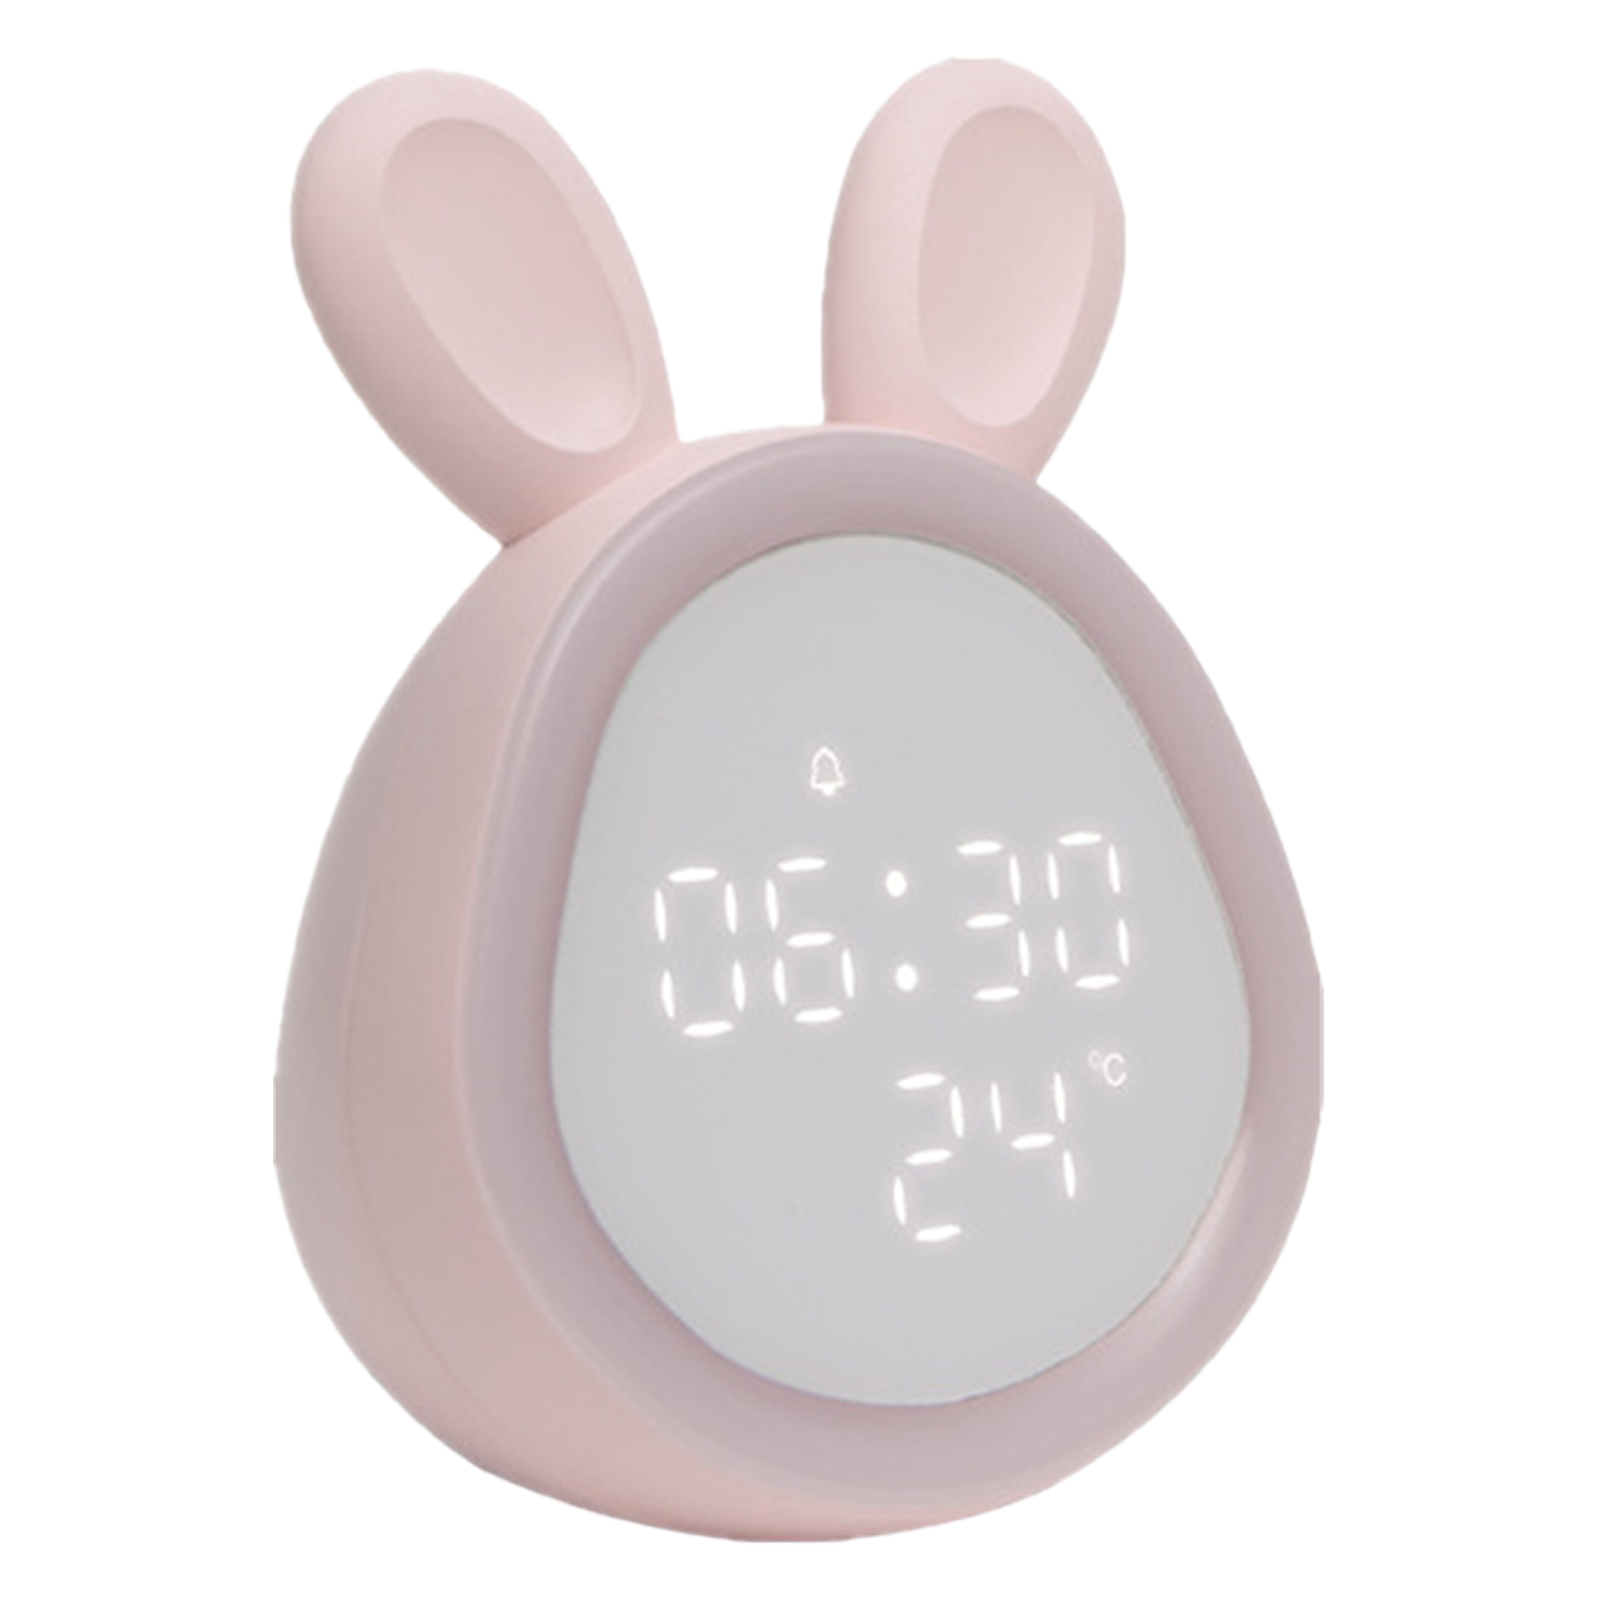 Cute Rabbit Alarm Clock Rechargeable Adjustable Brightness Led Luminous Digital Clock With Temperature Display